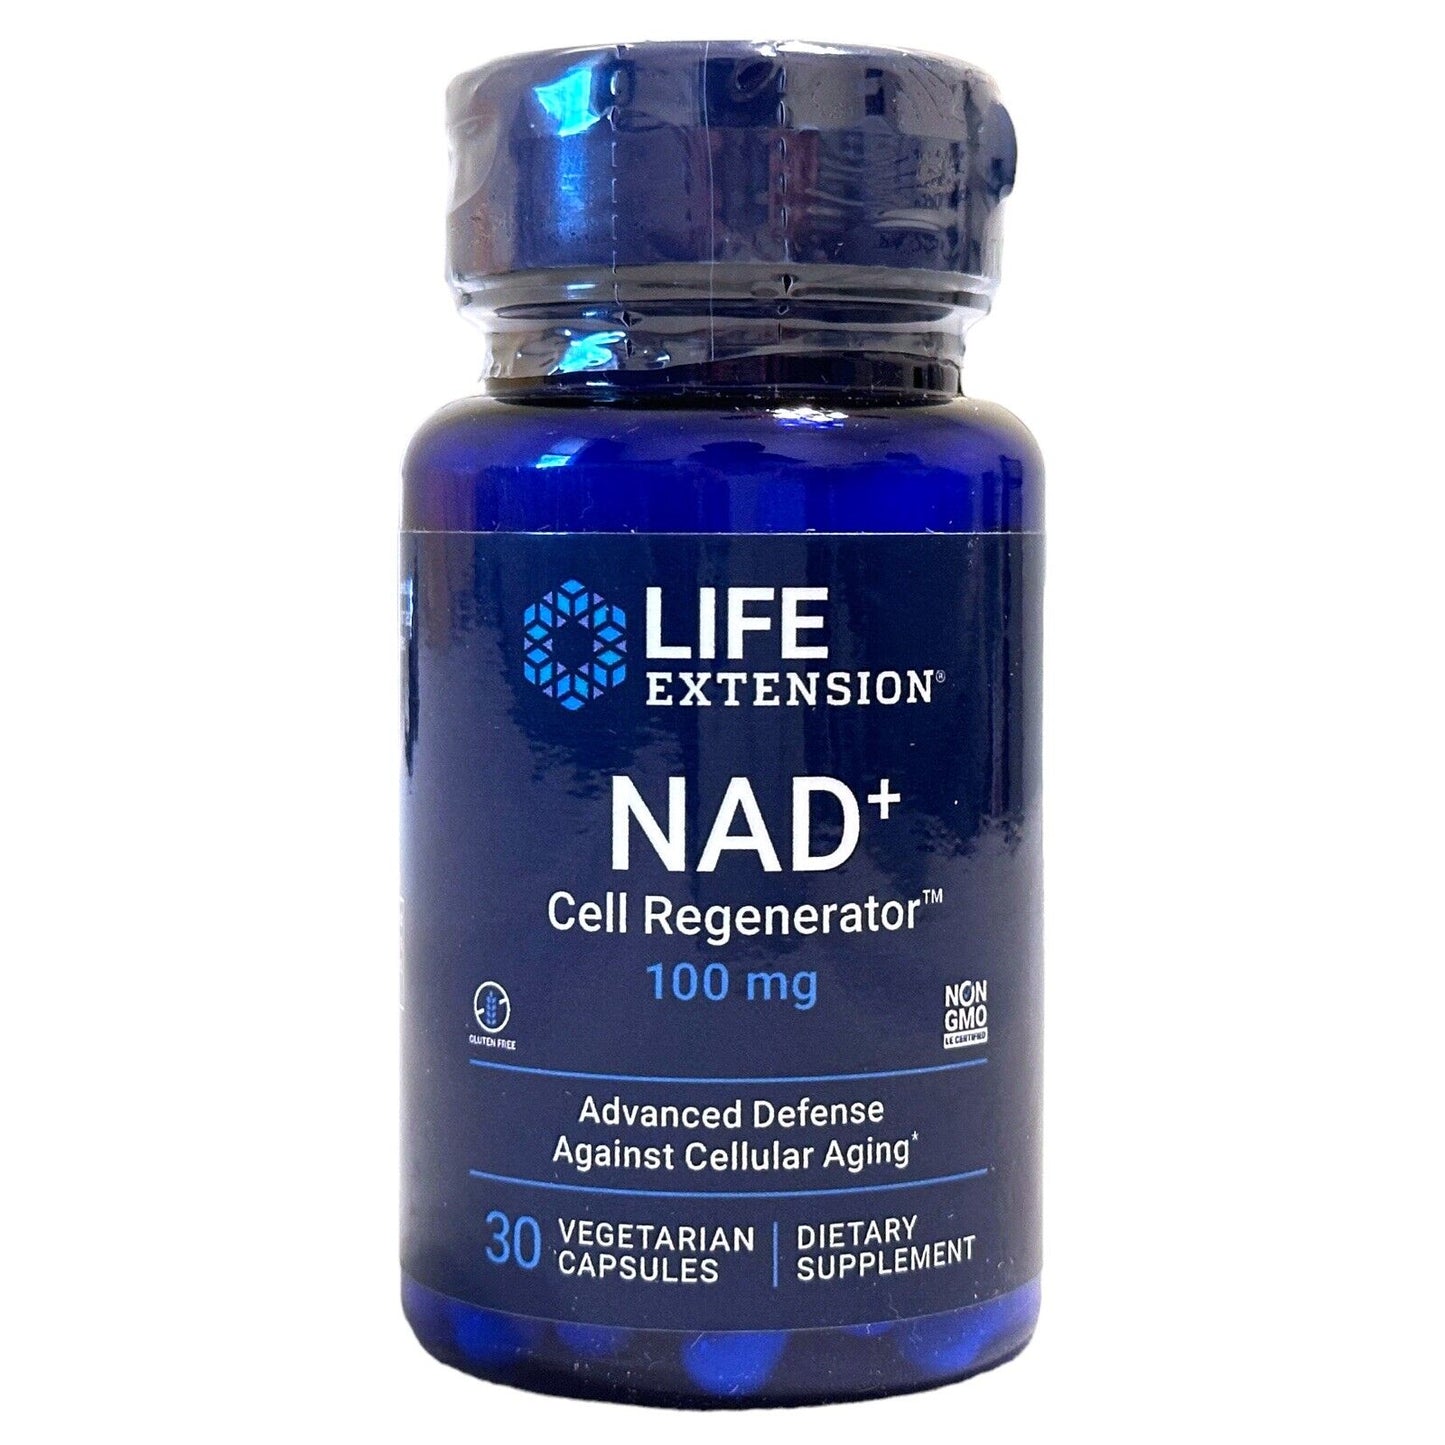 Nad+ Nicotinamide Riboside Cell Regenerator 